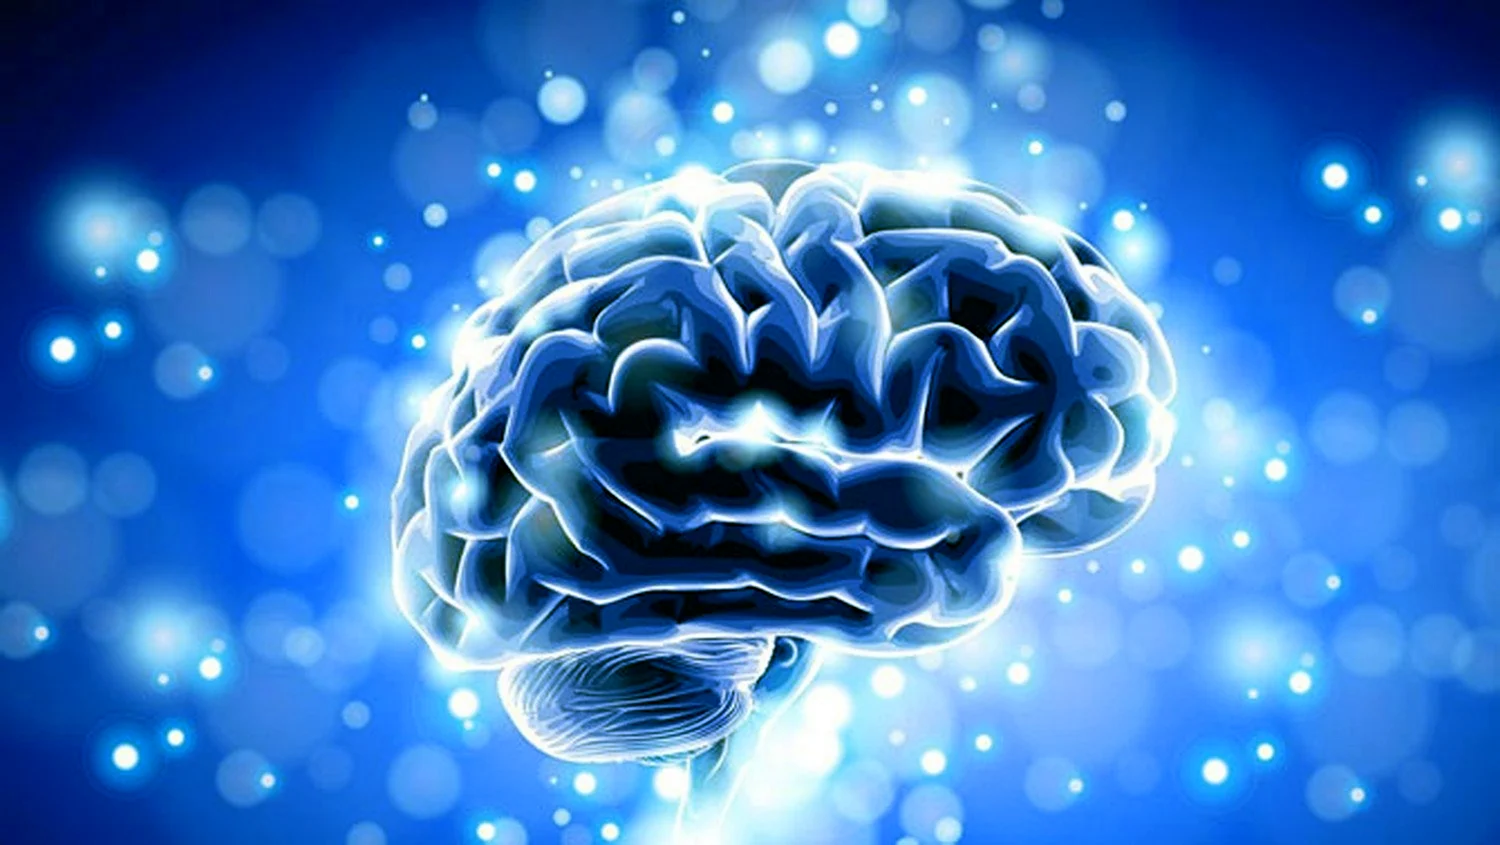 Brain 71. Мозг фон. Синий мозг. Презентация мозги фон бело-синий.